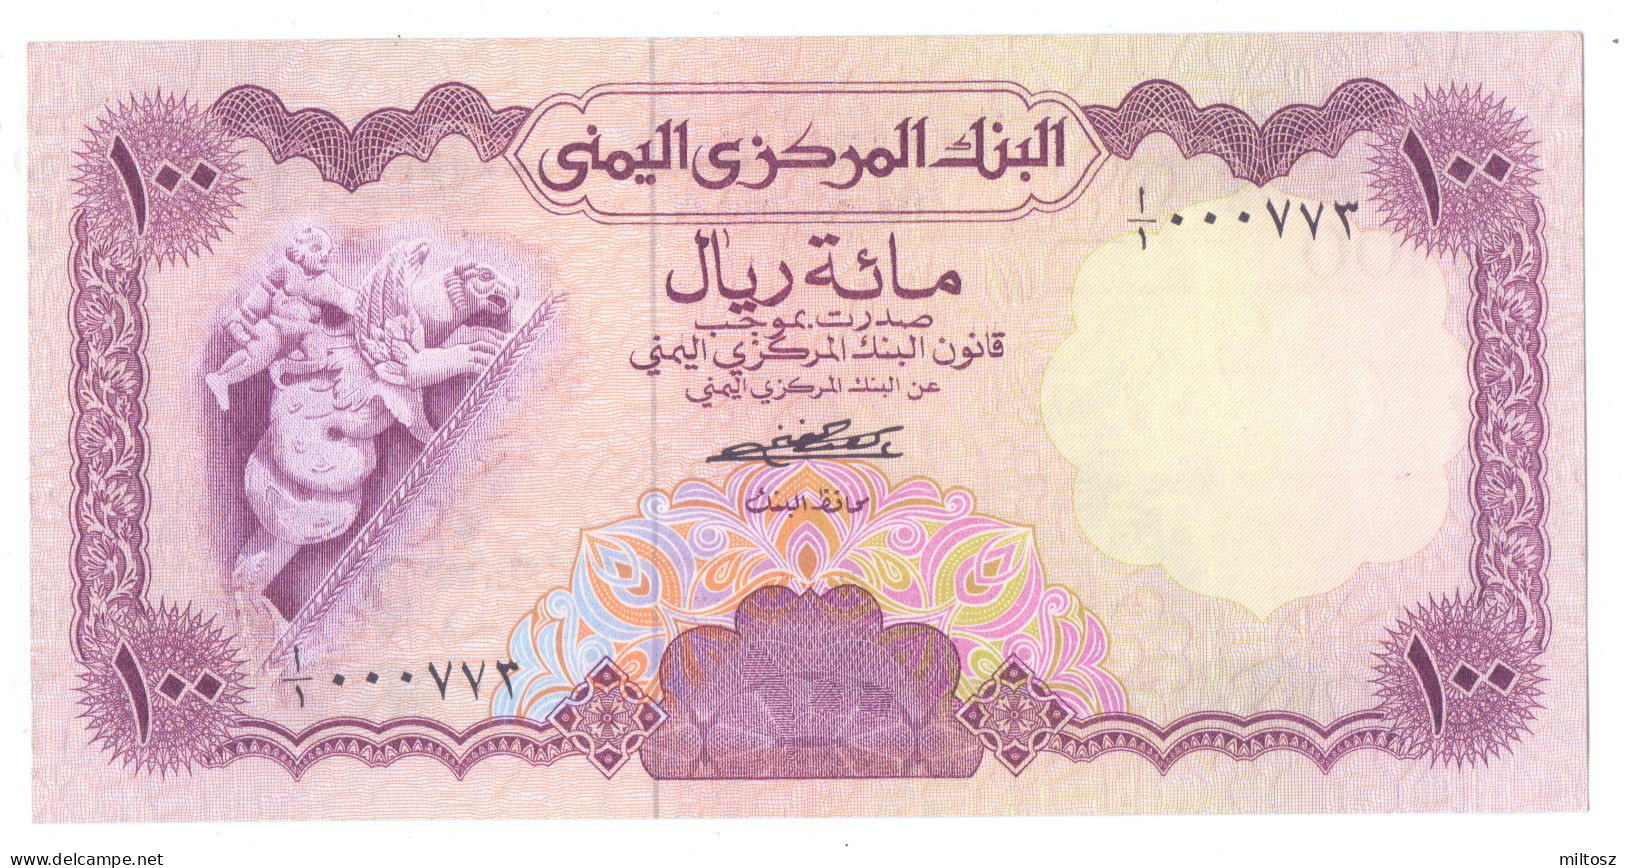 Yemen 100 Rials 1976 (signature 5) KM#16 - Yémen